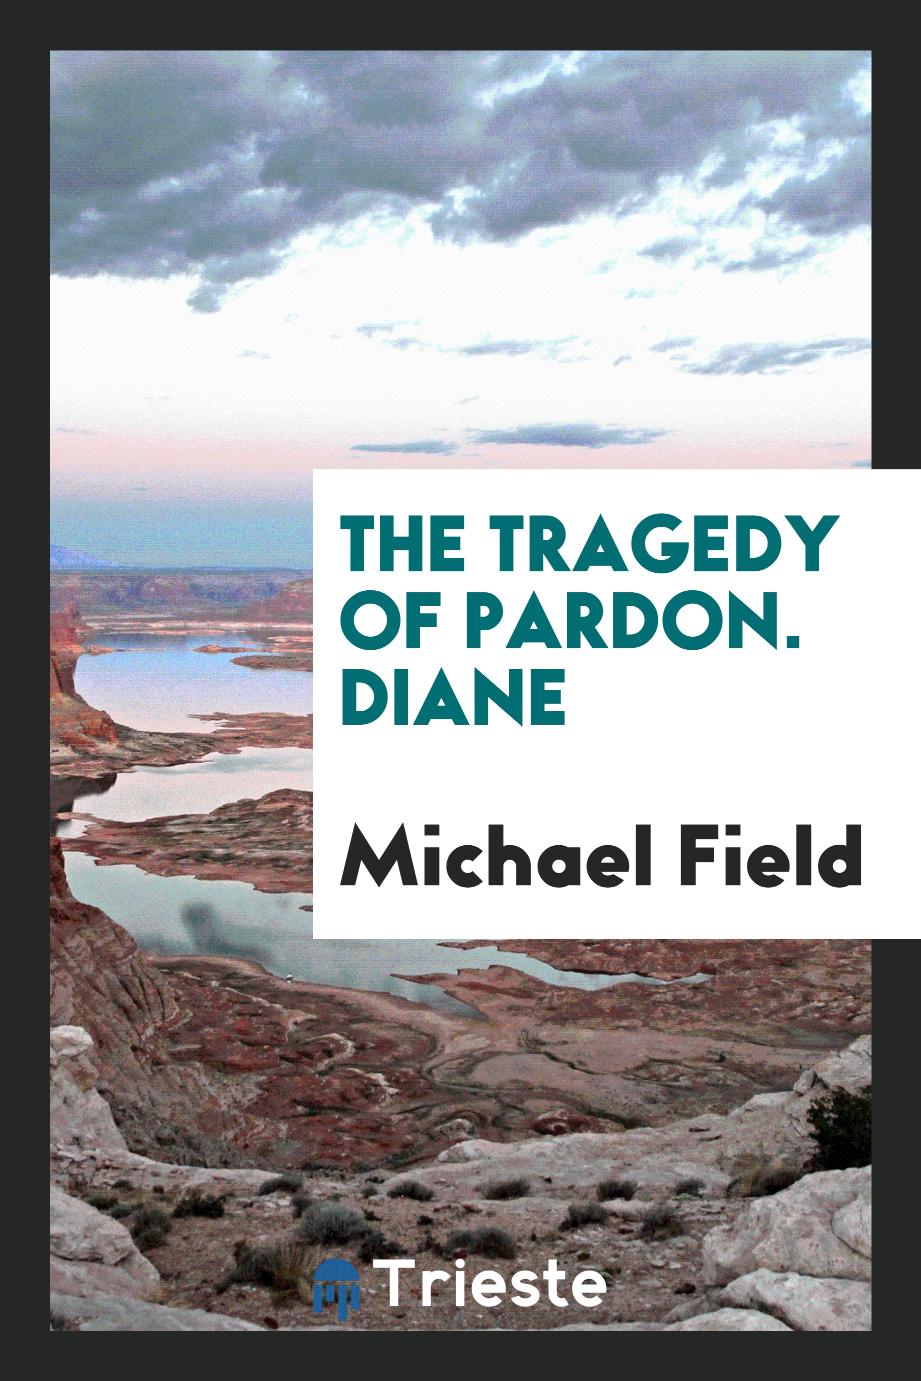 The tragedy of pardon. Diane